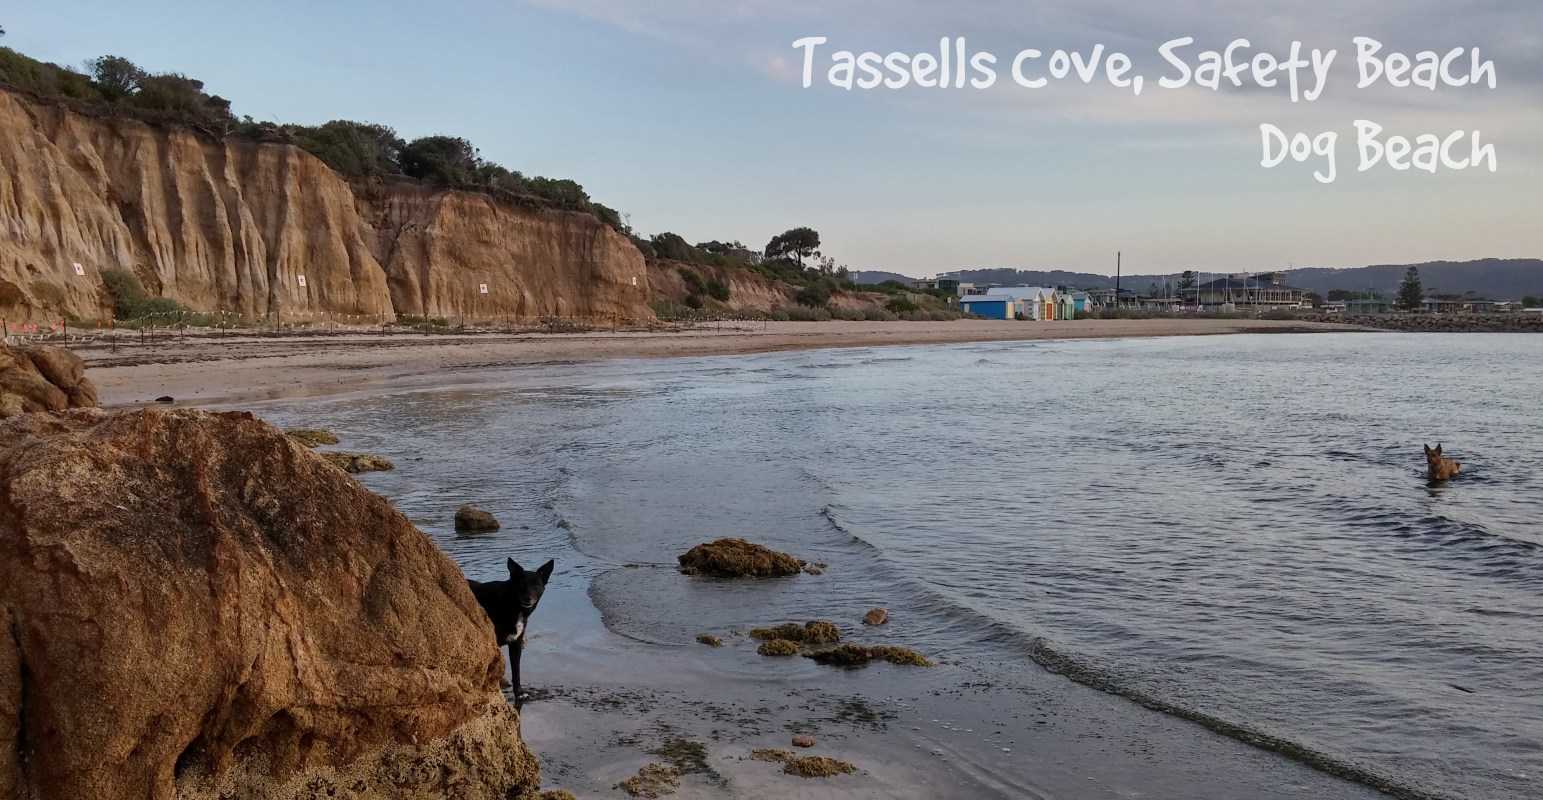 Tassells Cove, Safety Beach - Dog Beach